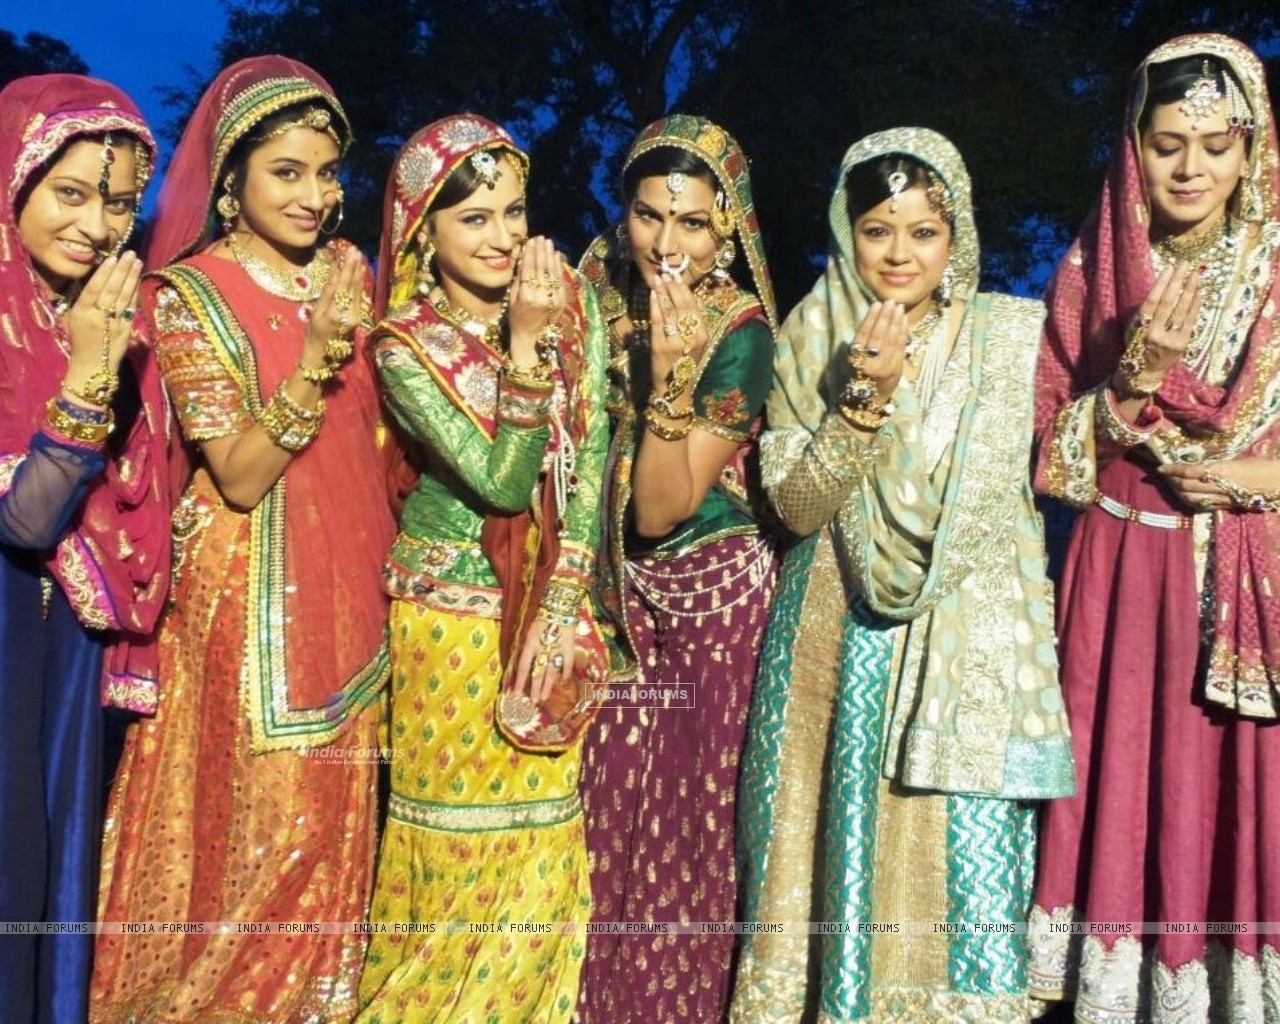 fond d'écran jodha akbar,un événement,sari,tradition,théâtre musical,mariage